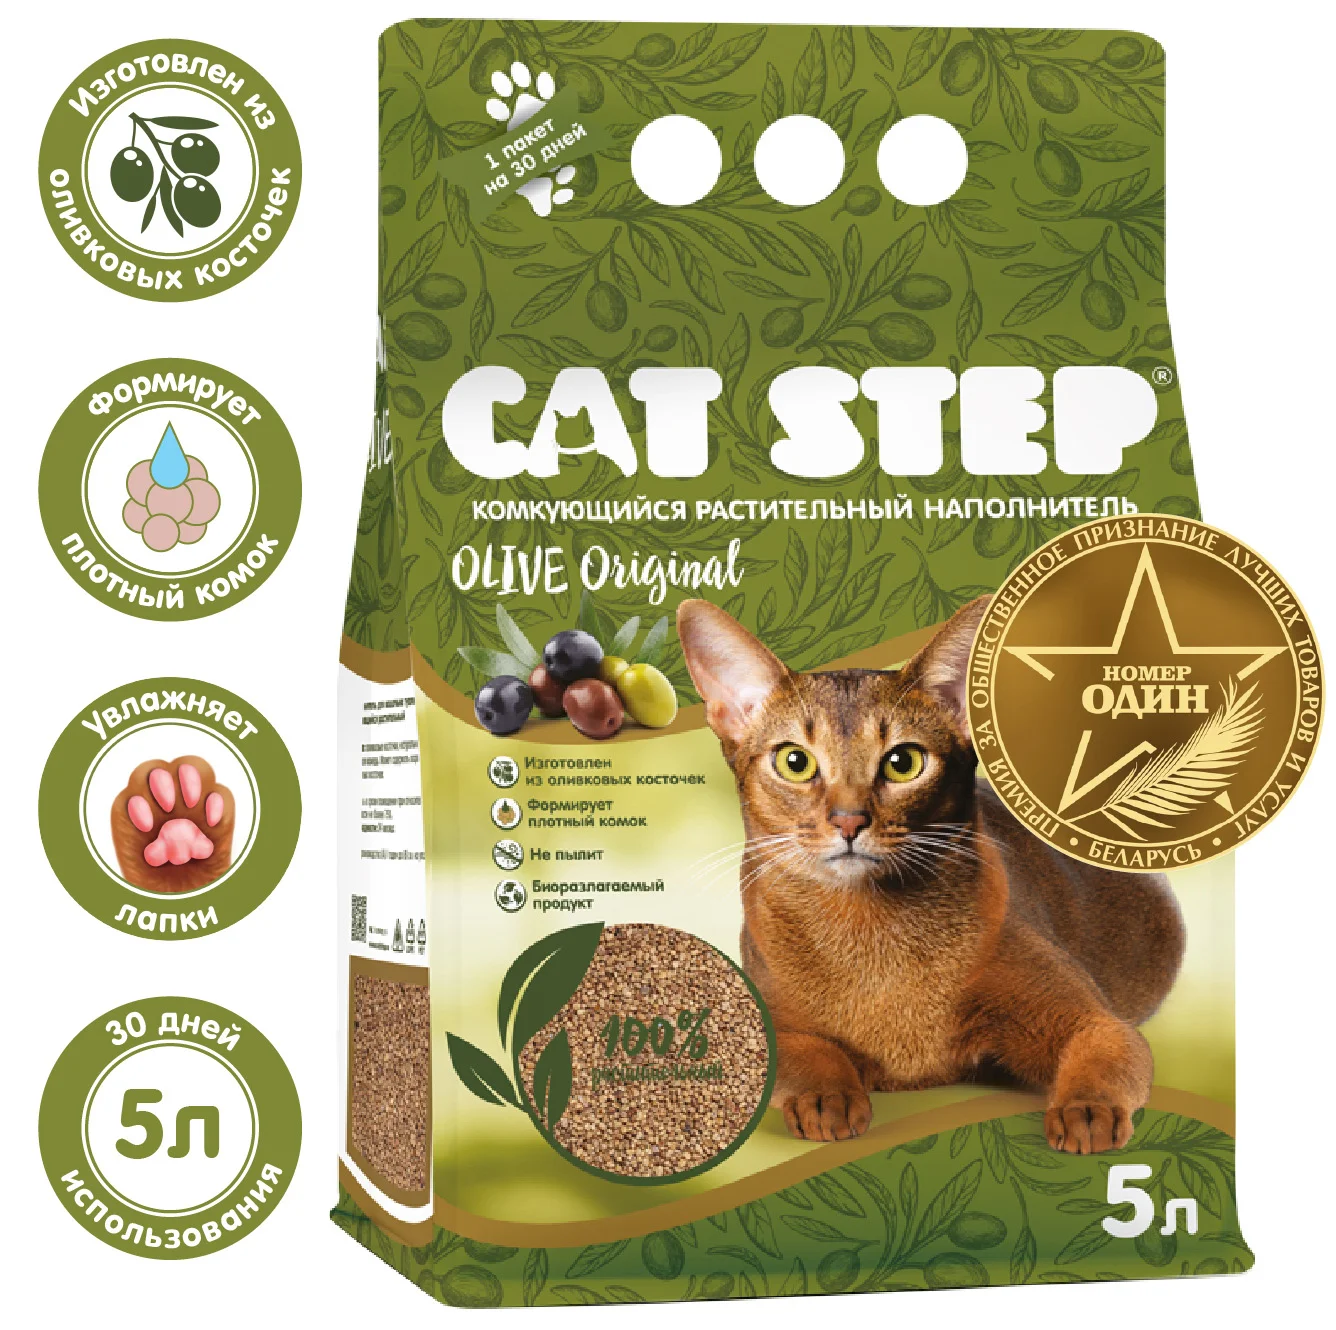 Cat Step Olive Original